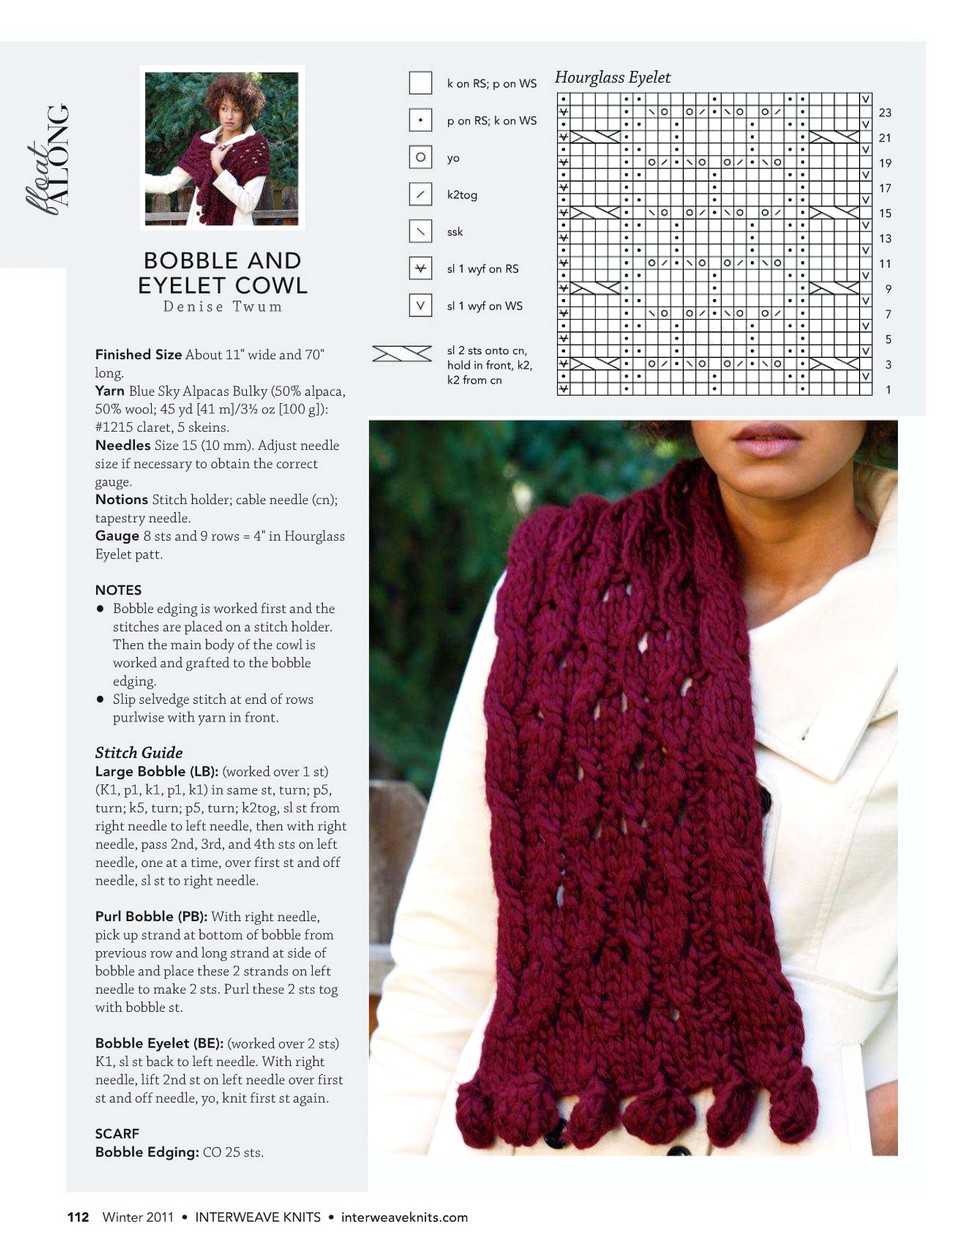 interweave-knits-winter-11-114